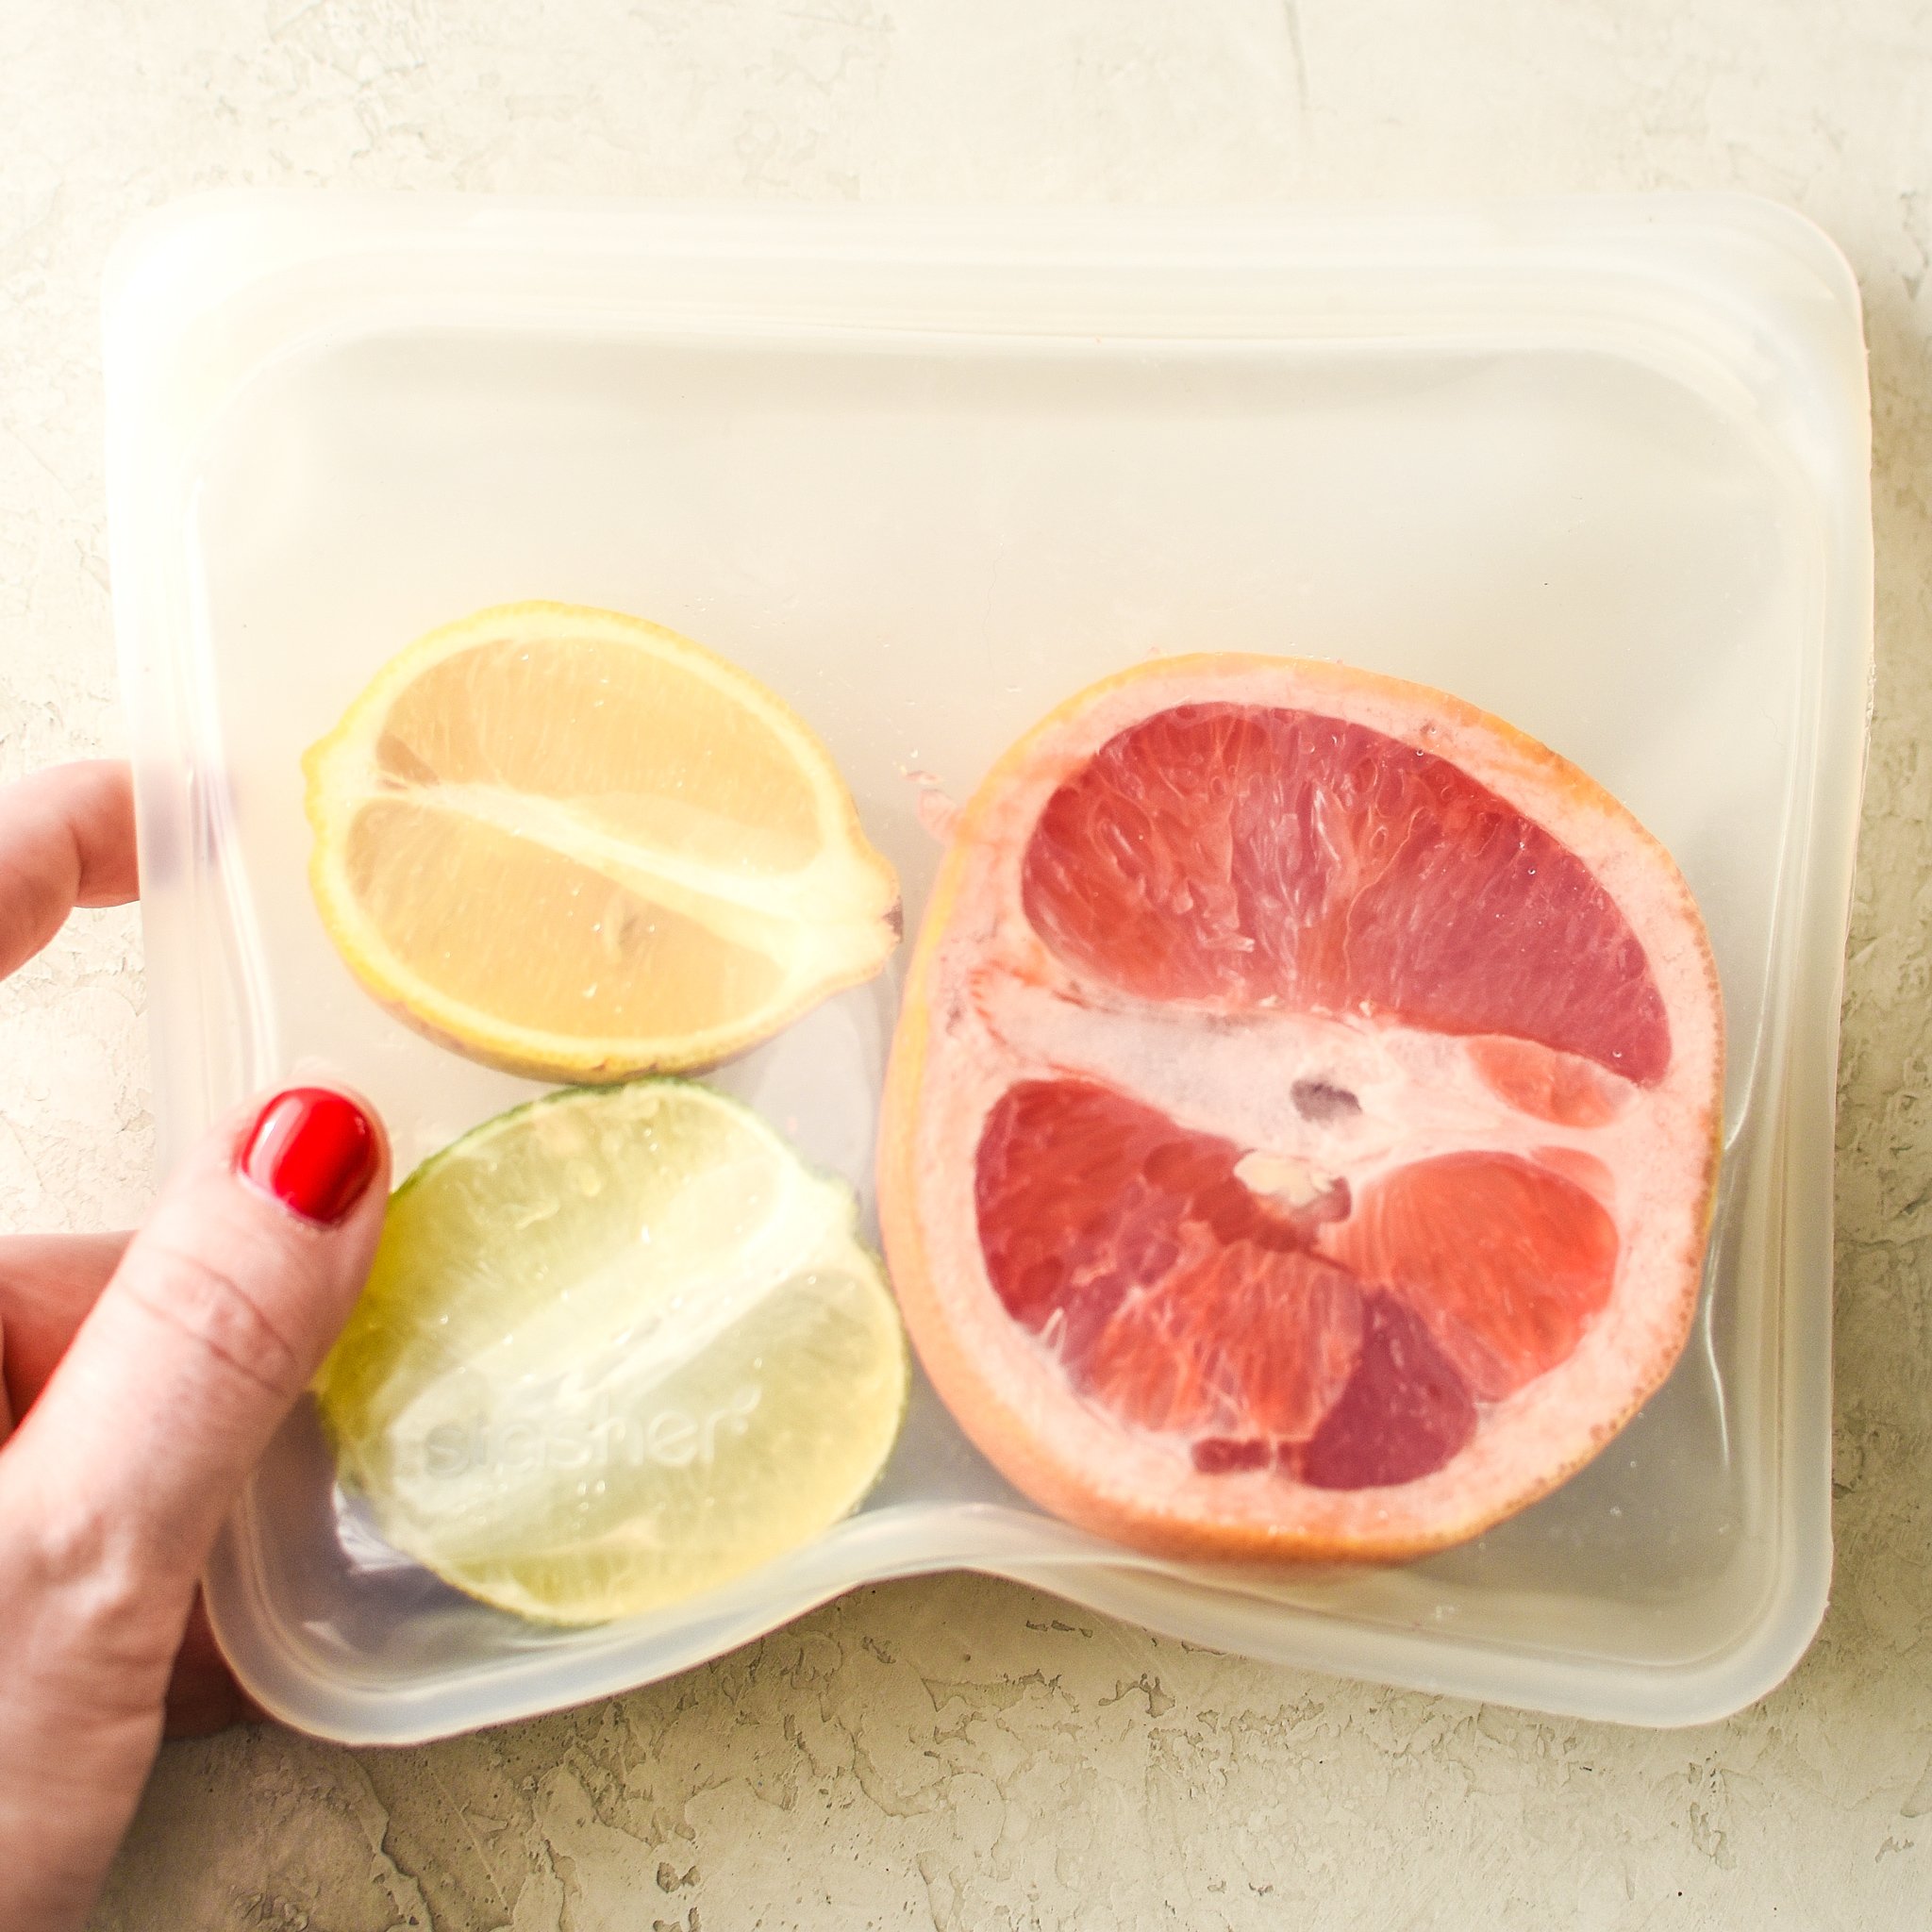 20+ Best Food Storage Containers (Meal Prep) - Jar Of Lemons